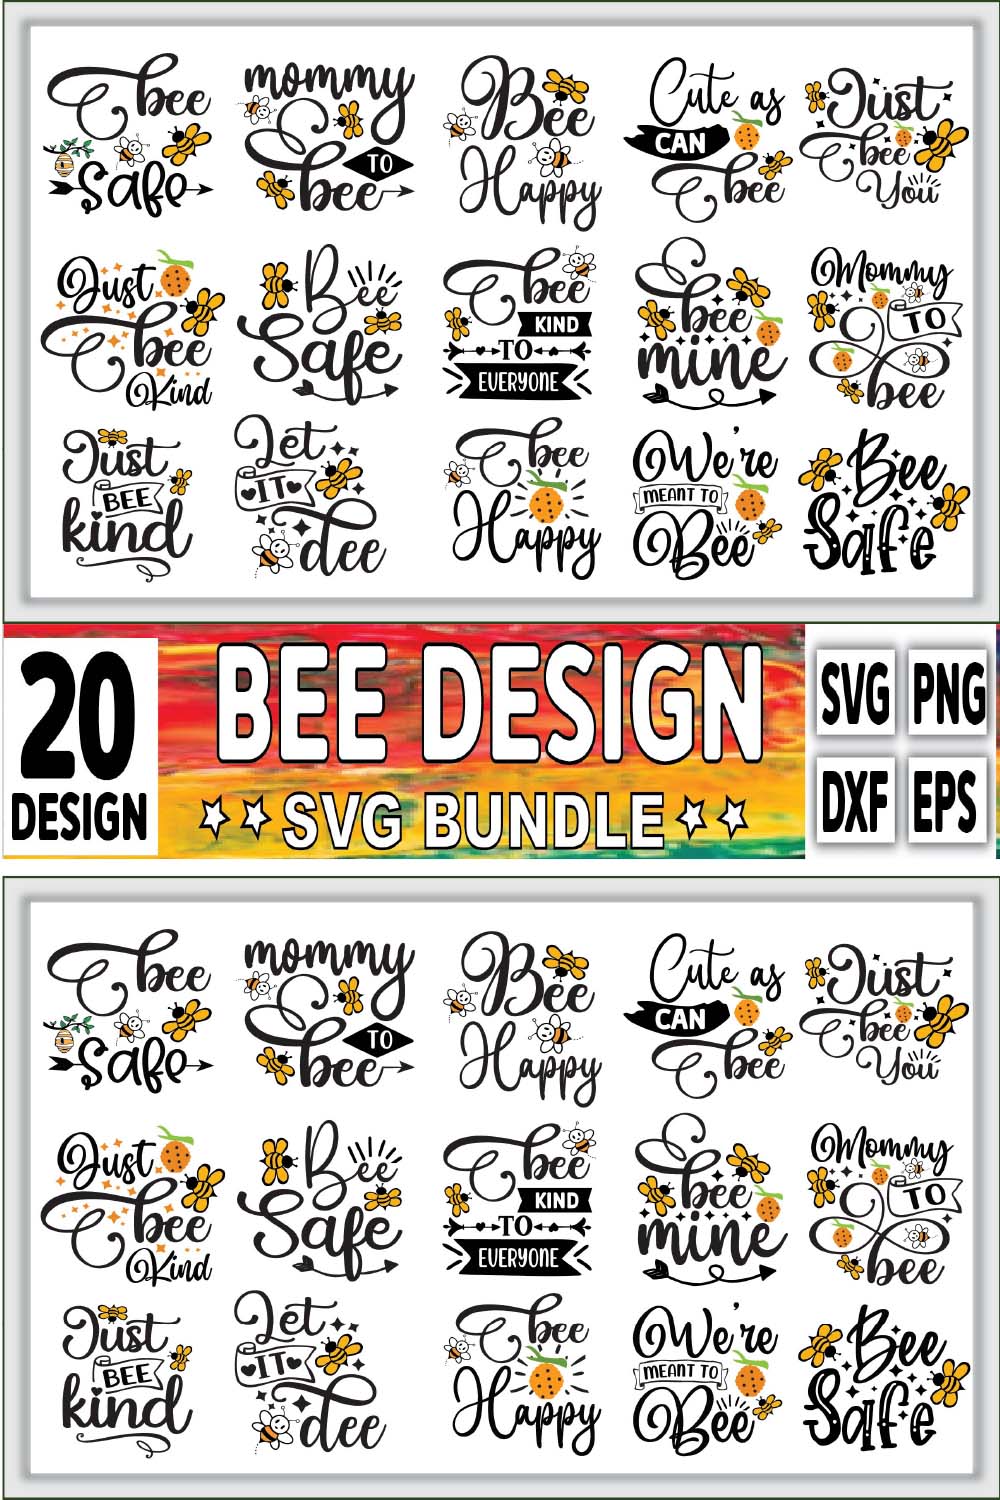 Bee design svg bundle.